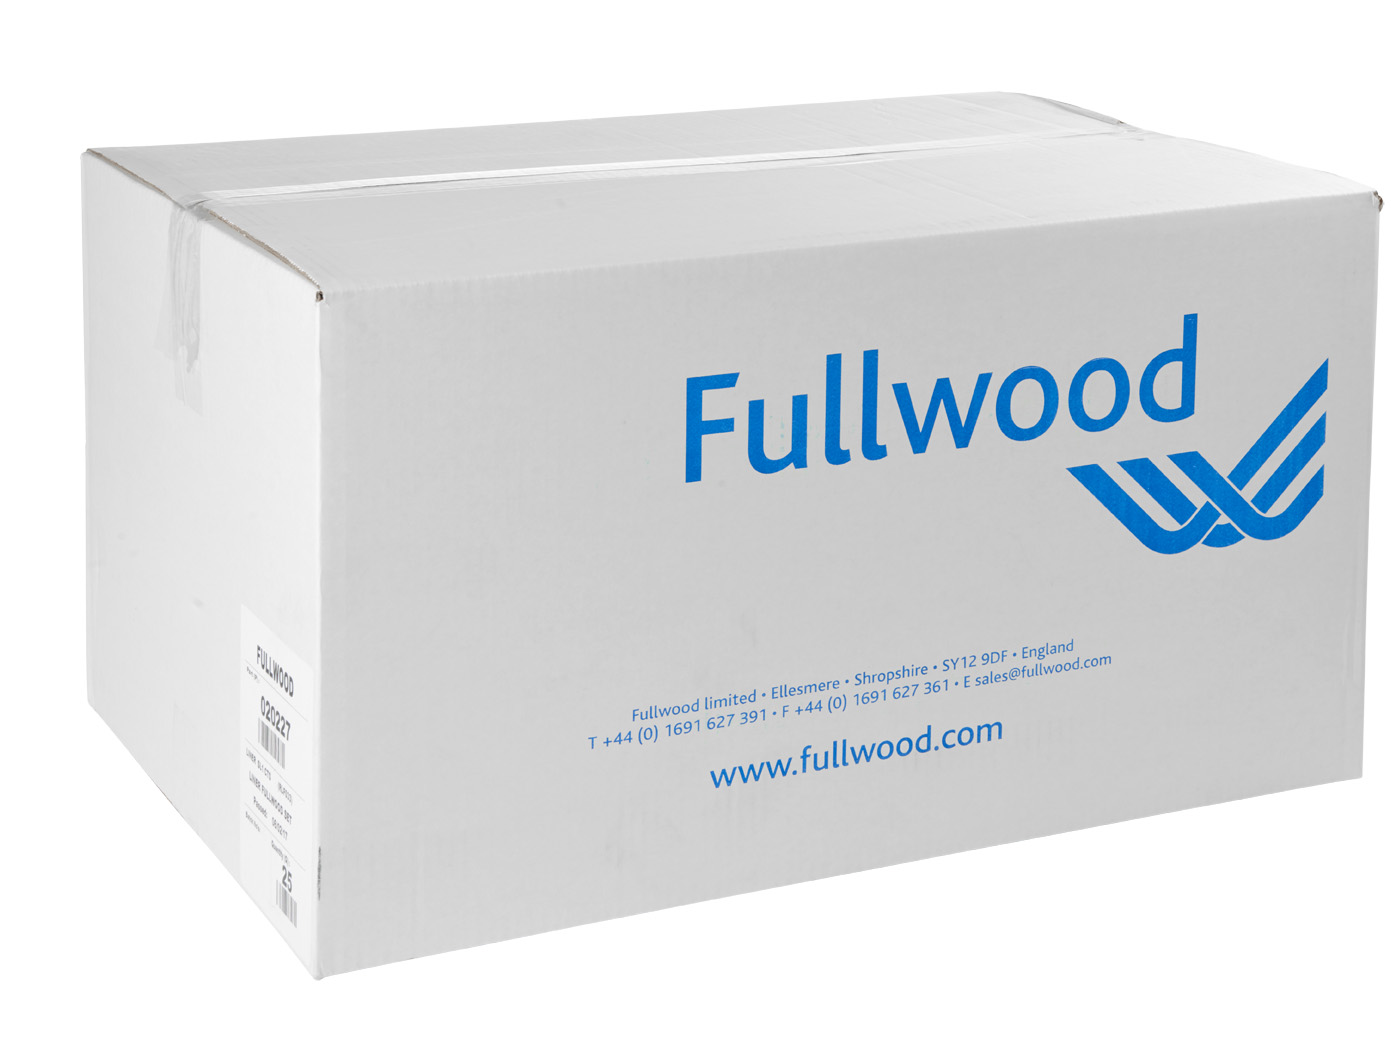 Fullwood_karton_3.jpg